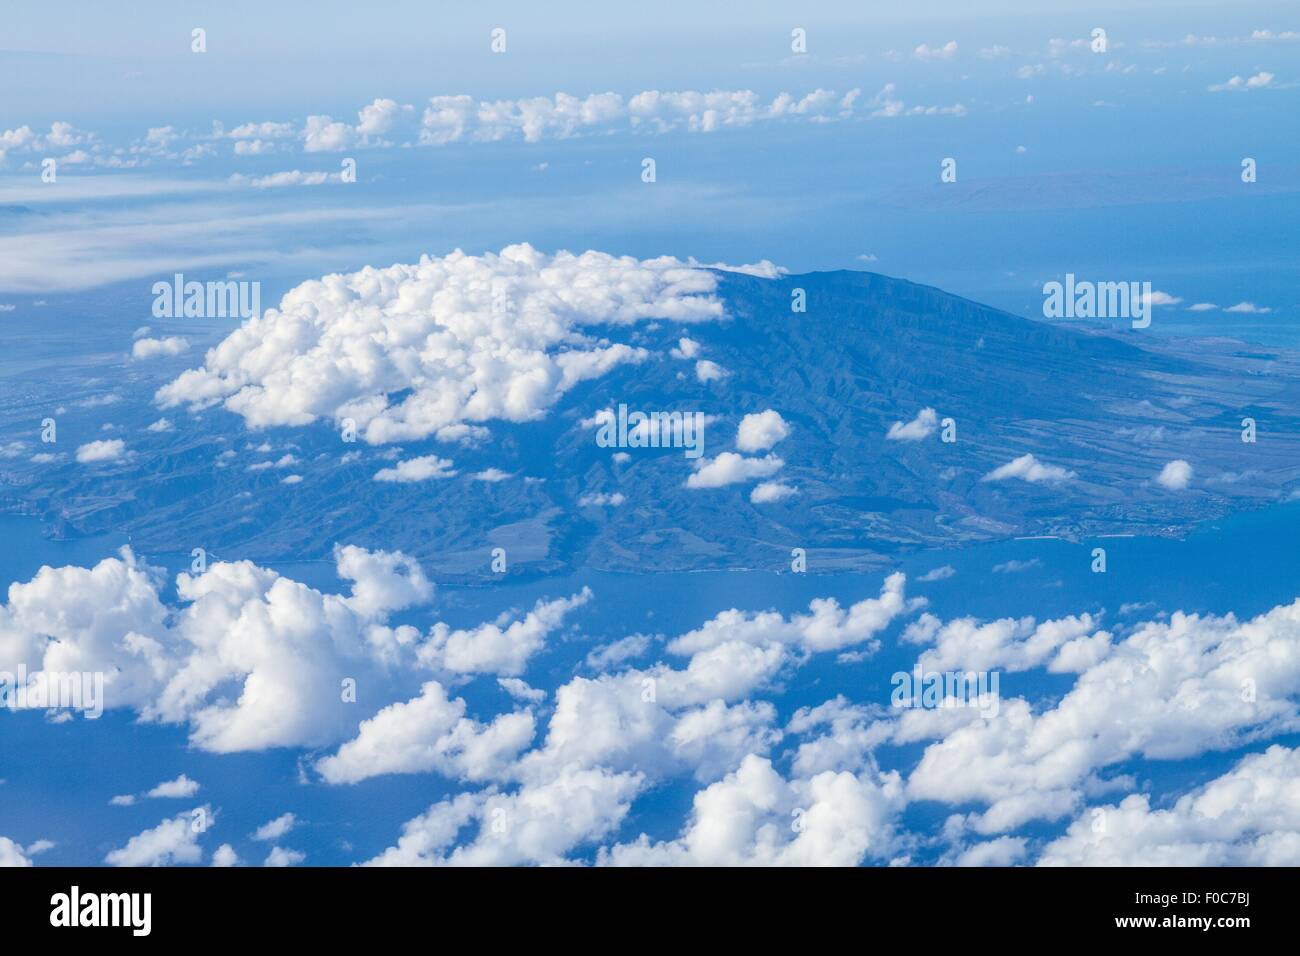 Hawaii visto attraverso le nuvole, vista aerea Foto Stock